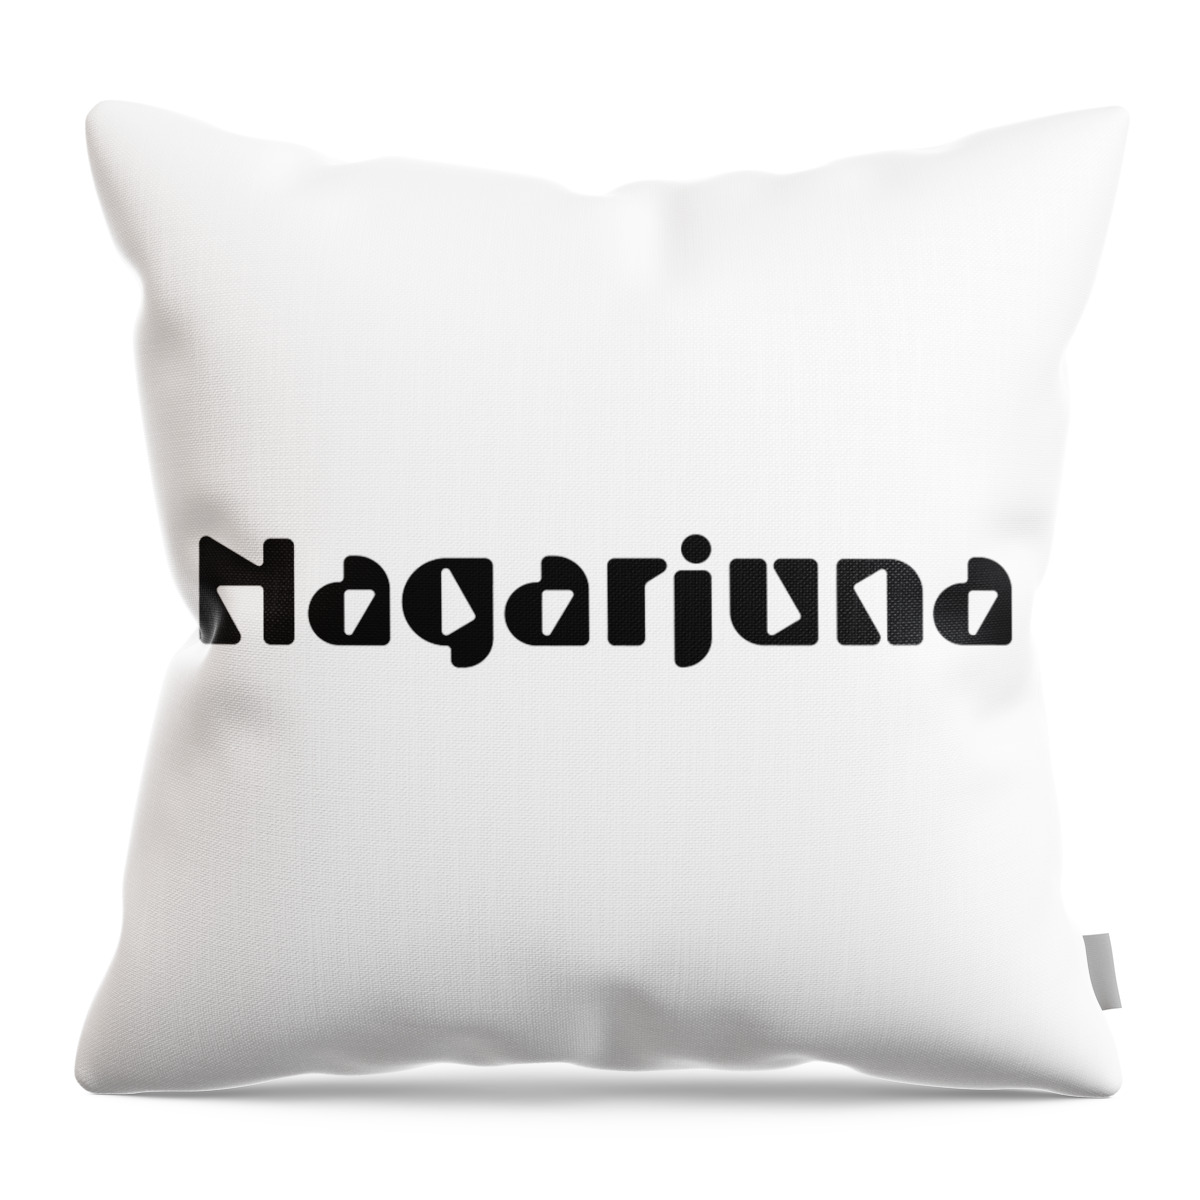 Nagarjuna Throw Pillow featuring the digital art Nagarjuna by TintoDesigns